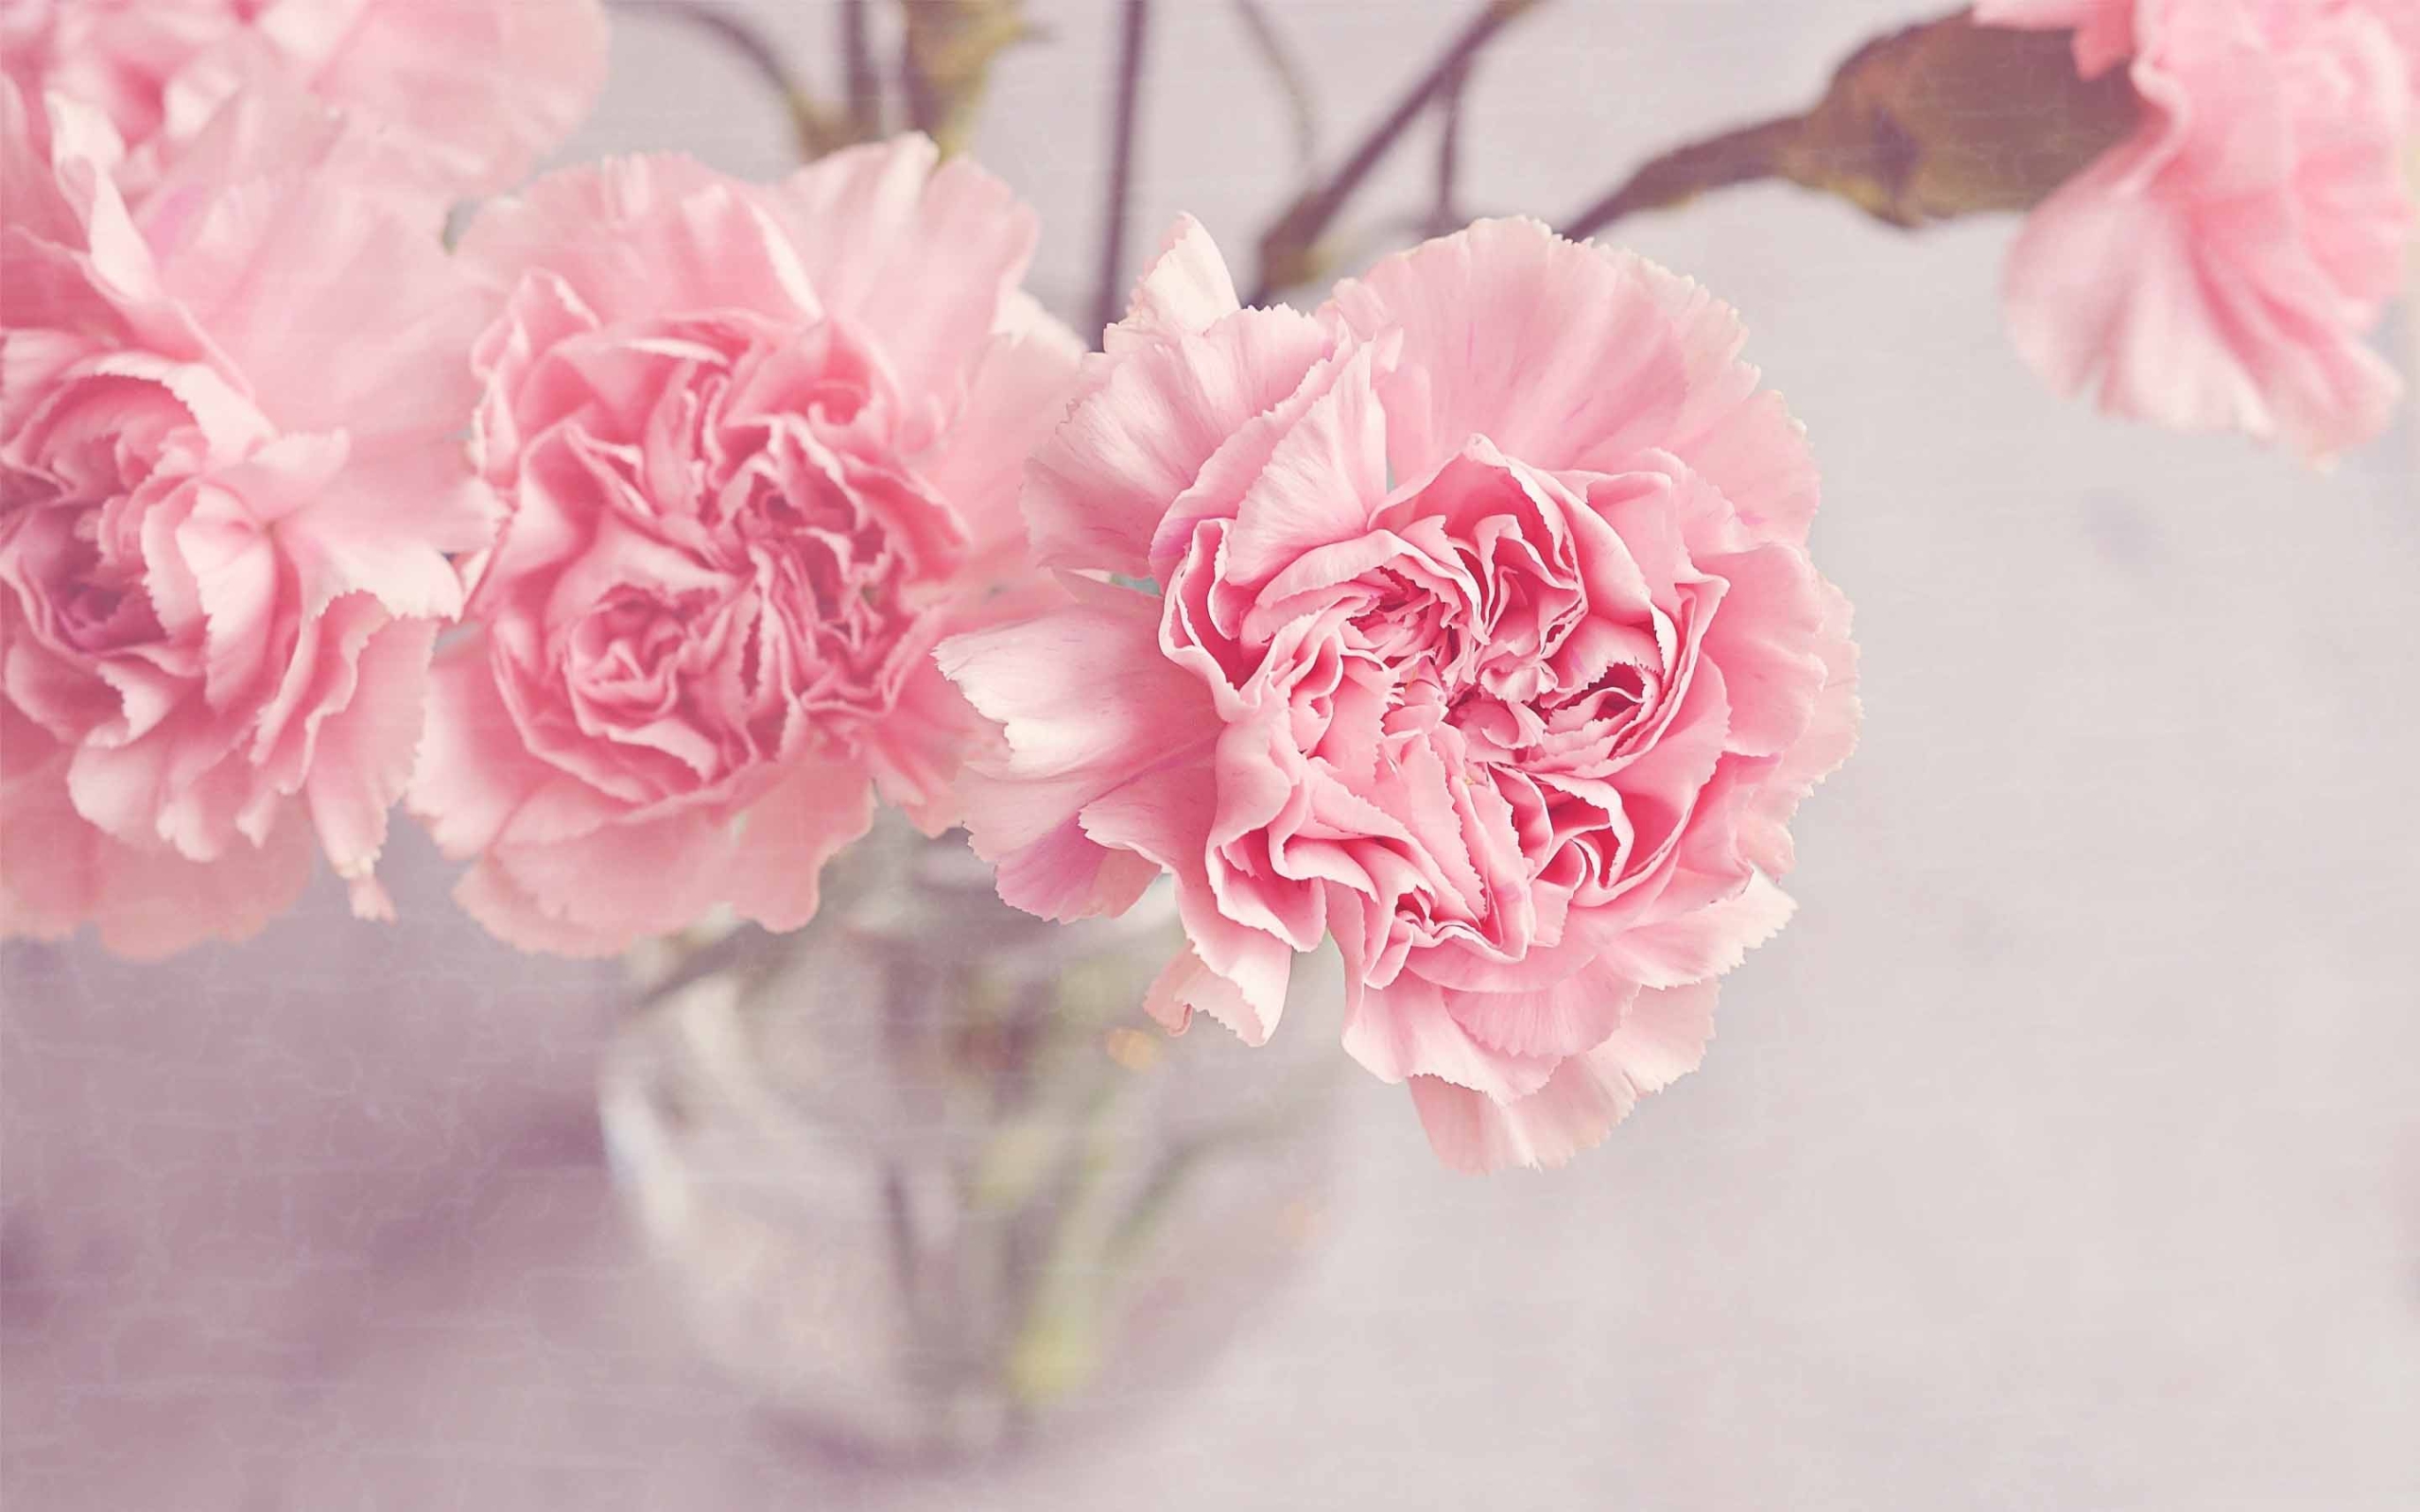 Light Pink Carnation Flowers Mac Wallpaper Download. Free Mac